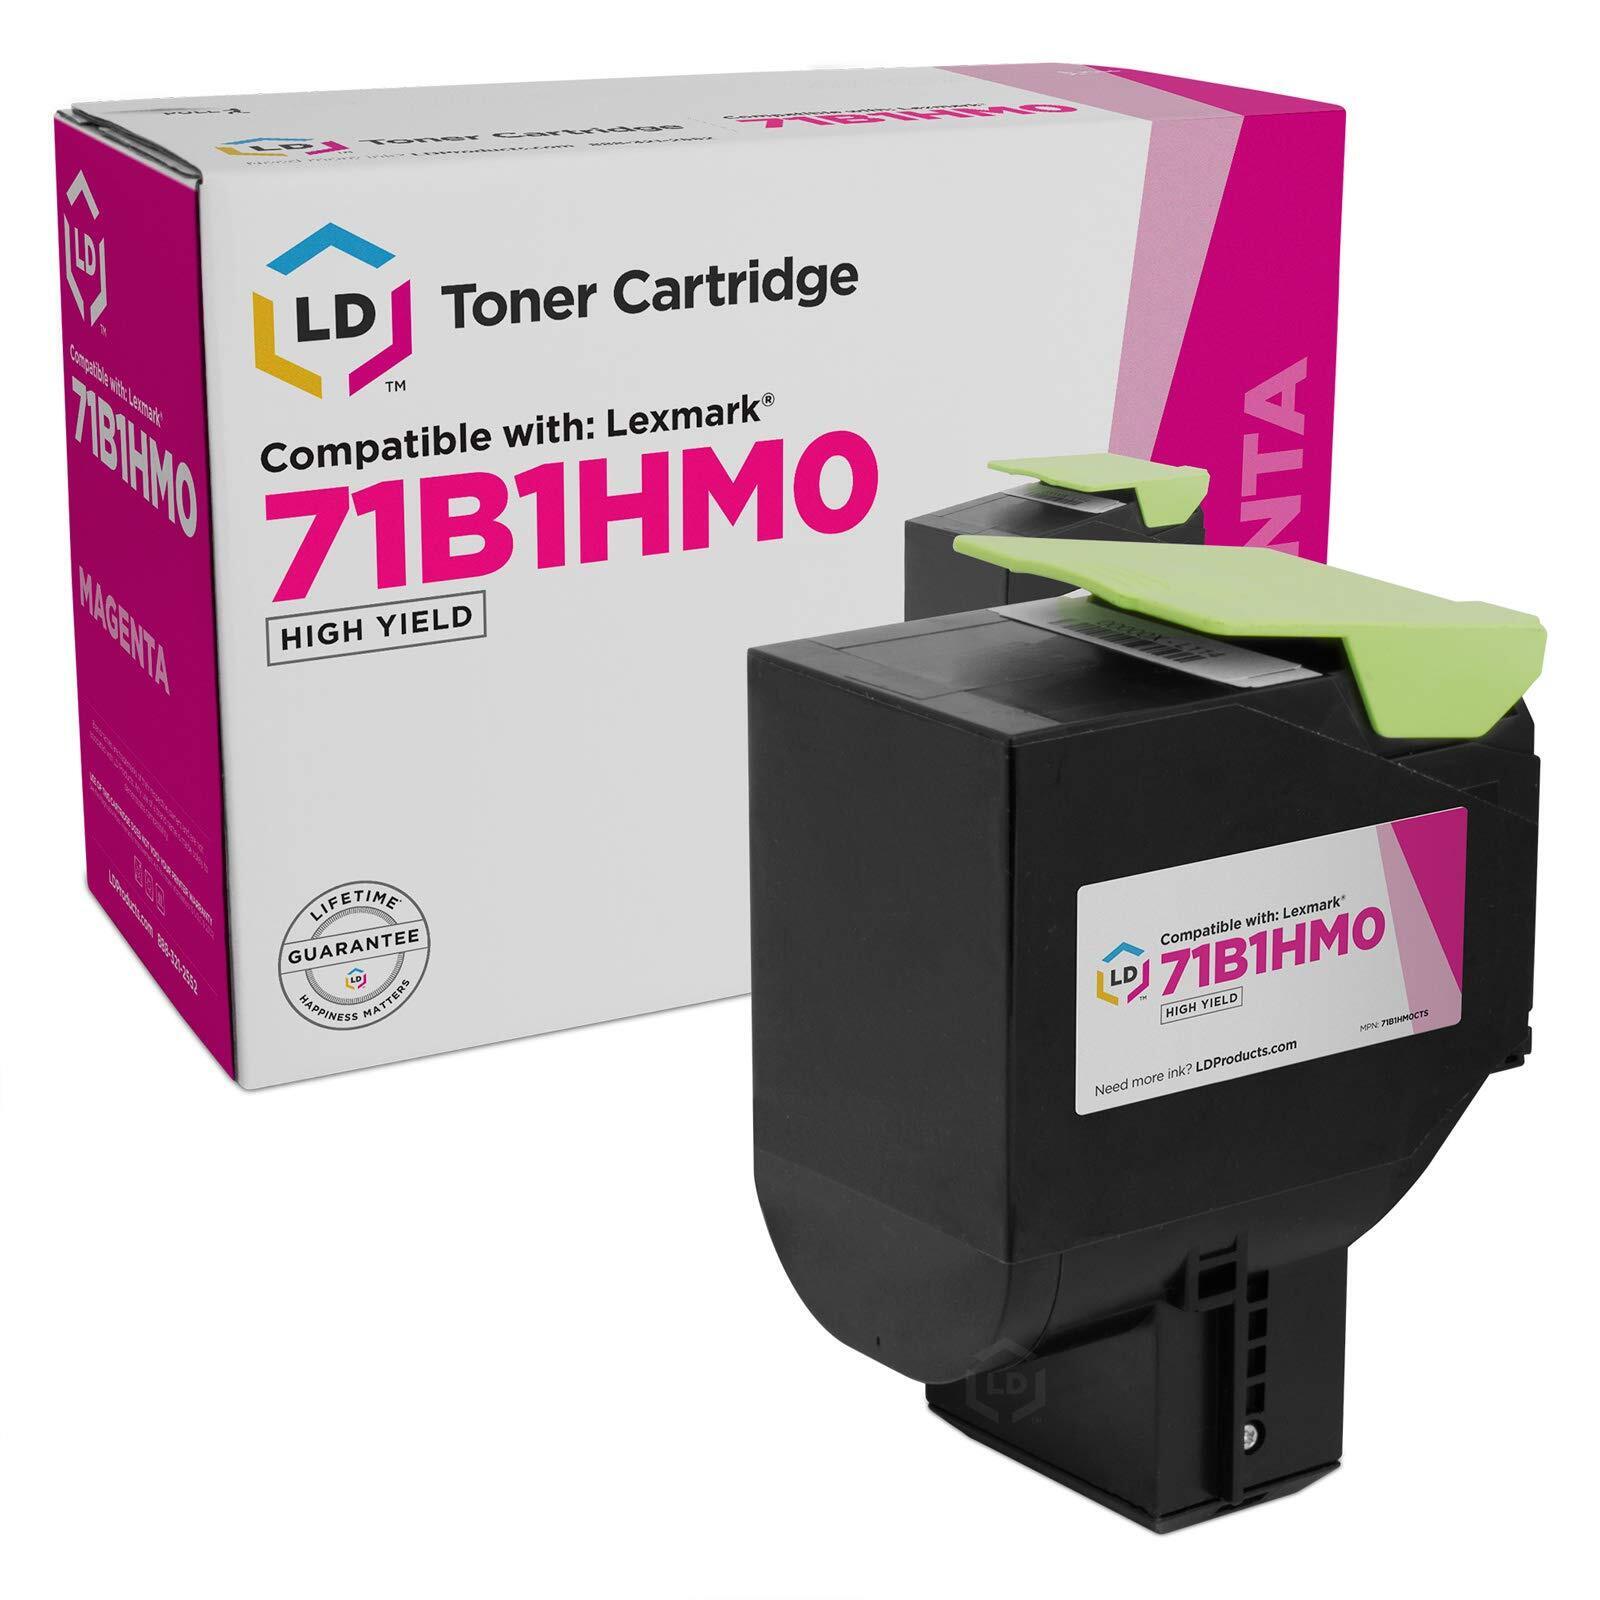 LD Compatible Lexmark 71B1HM0 High Yield Magenta Toner for CS517de, CX517de